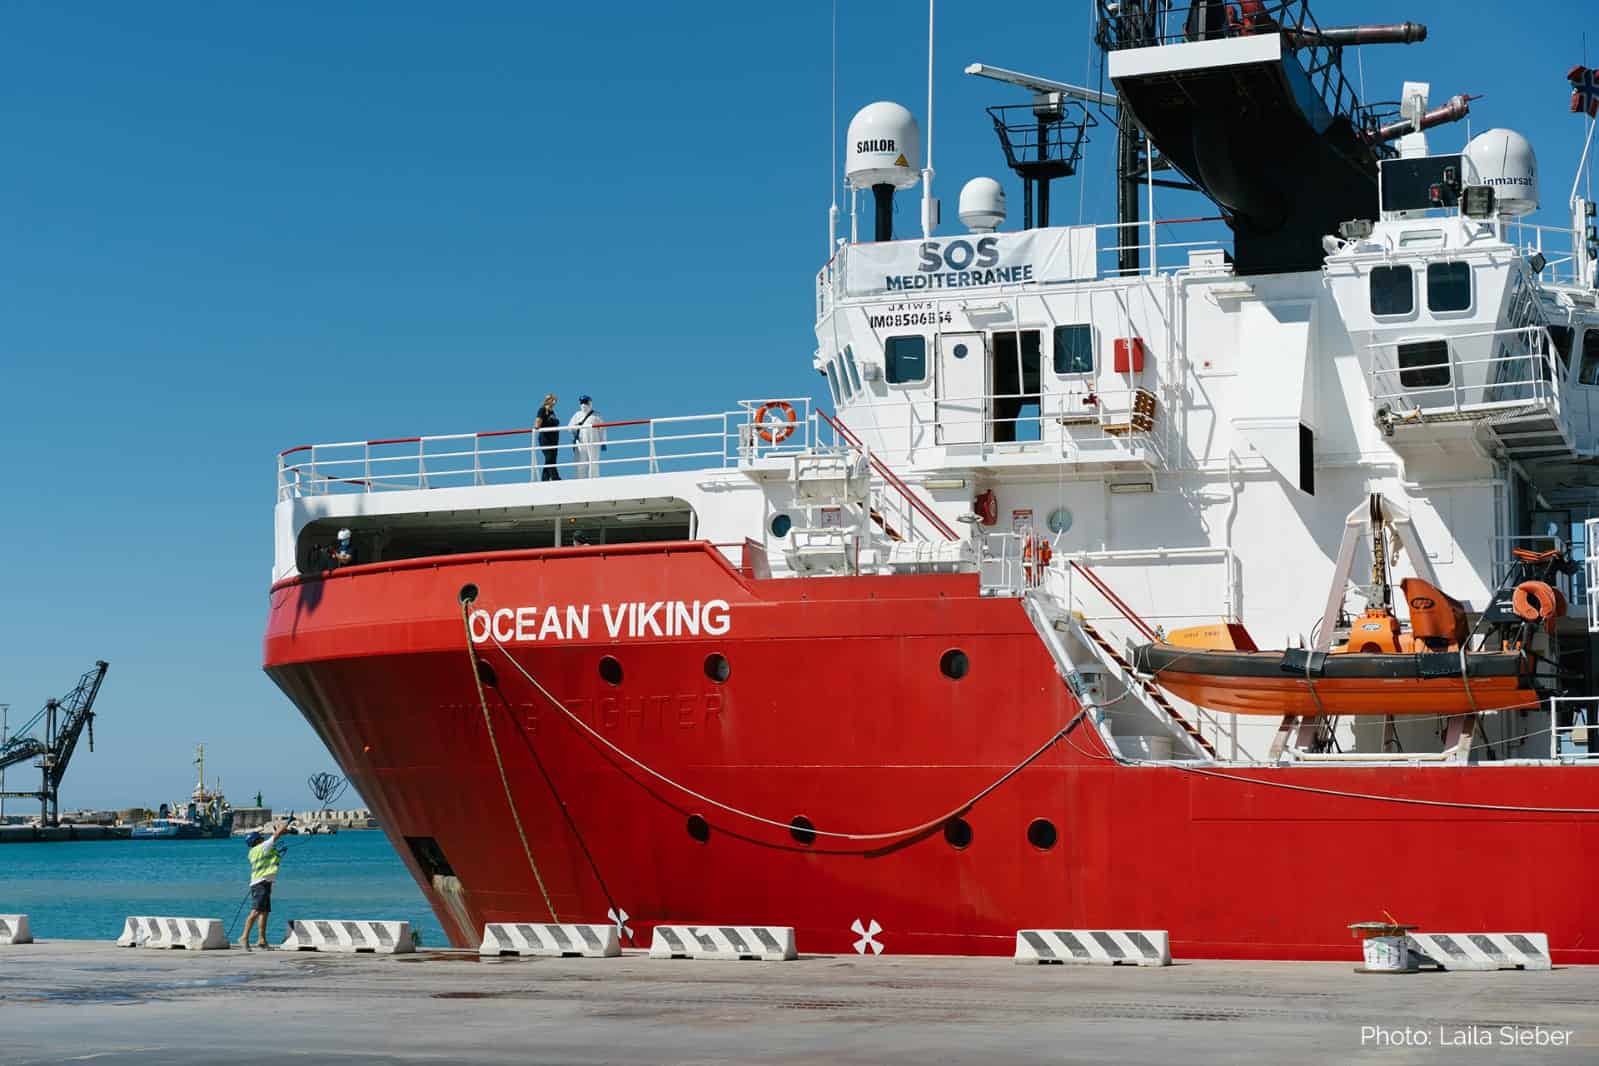 Fermo amministrativo per la Ocean Viking. La denuncia di SOS MEDITERRANEE